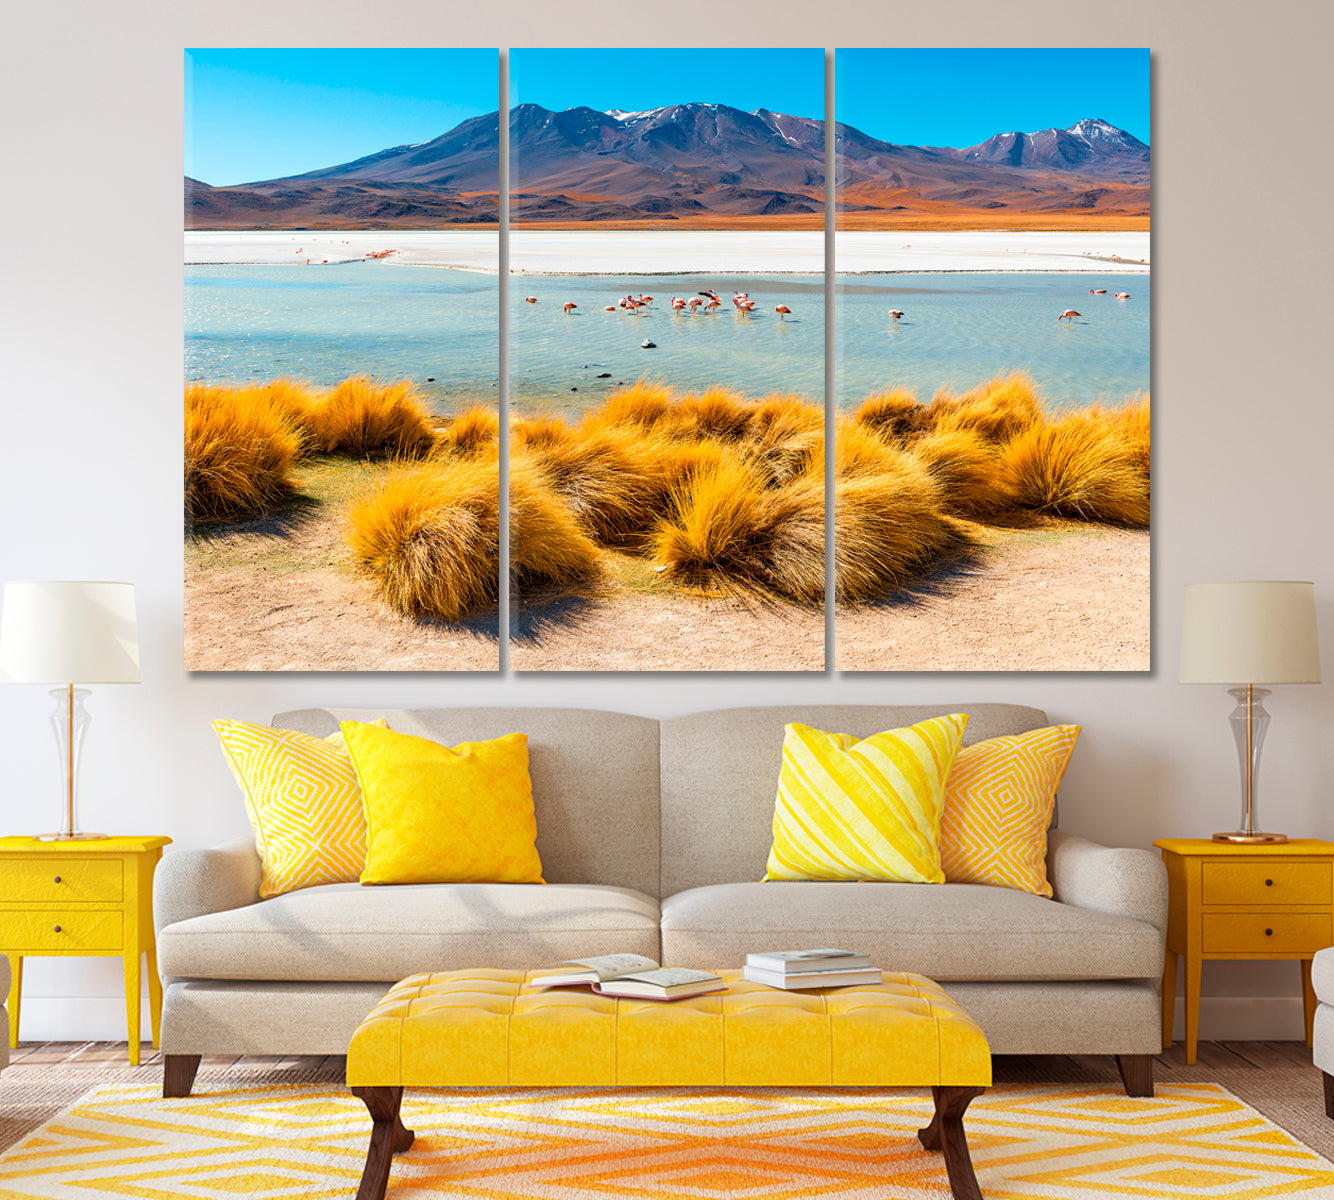 Laguna Canapa with Flamingos Bolivia Canvas Print ArtLexy 3 Panels 36"x24" inches 